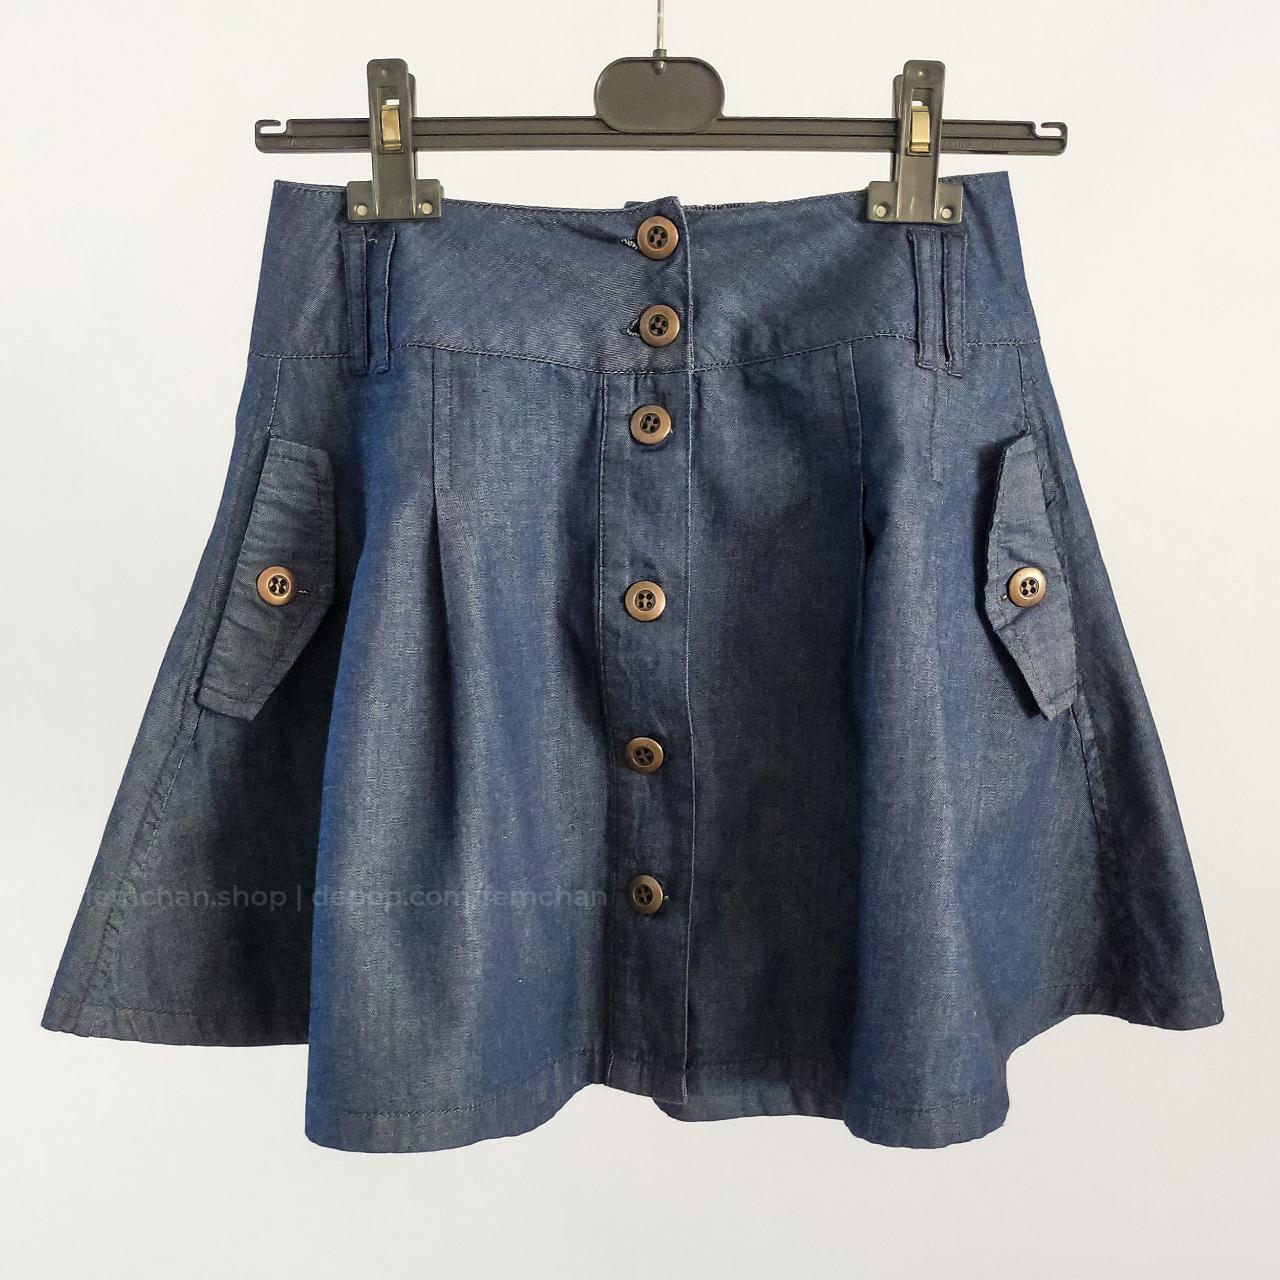 Product Image 1 - Dark denim high-waisted mini skirt